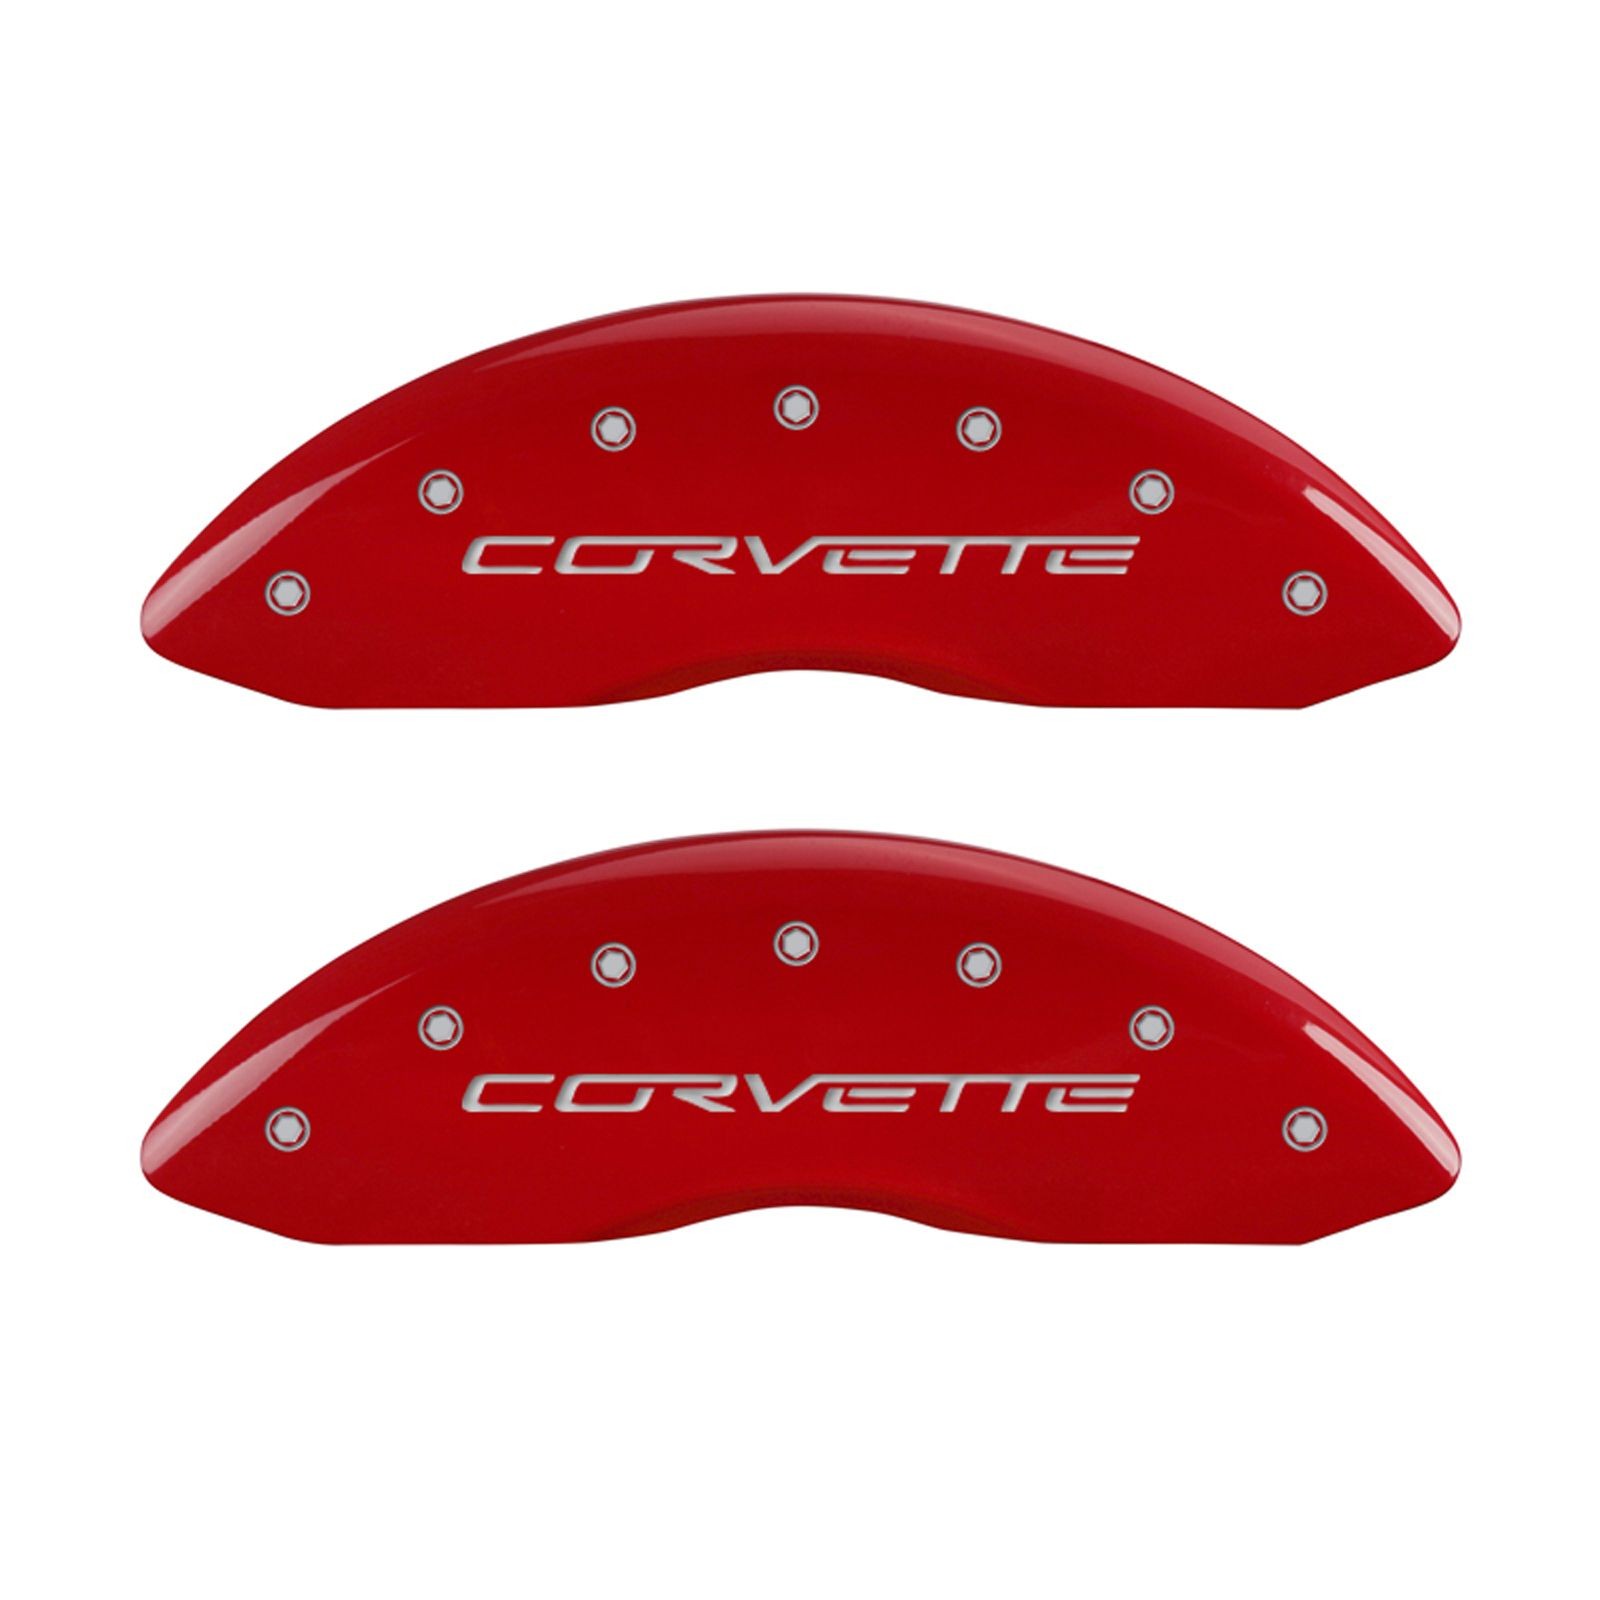 C6 Corvette 2005-13 Brake Caliper Covers, Corvette Logo, Aluminum, Red Finish, Silver Corvette, Set of 4